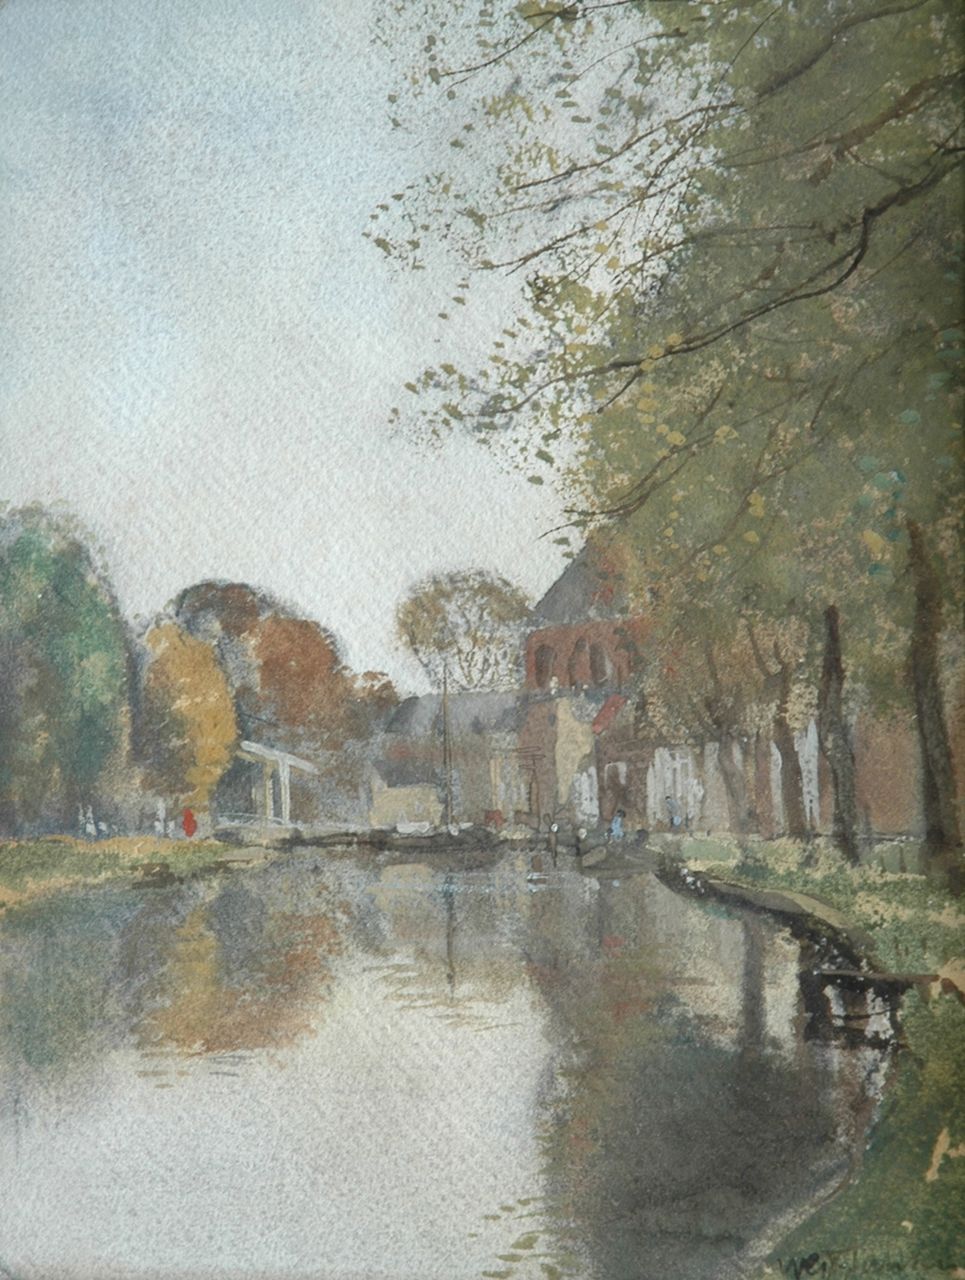 Jansen W.G.F.  | 'Willem' George Frederik Jansen, A canal with a drawbridge, Aquarell auf Papier 29,1 x 22,8 cm, signed l.r.